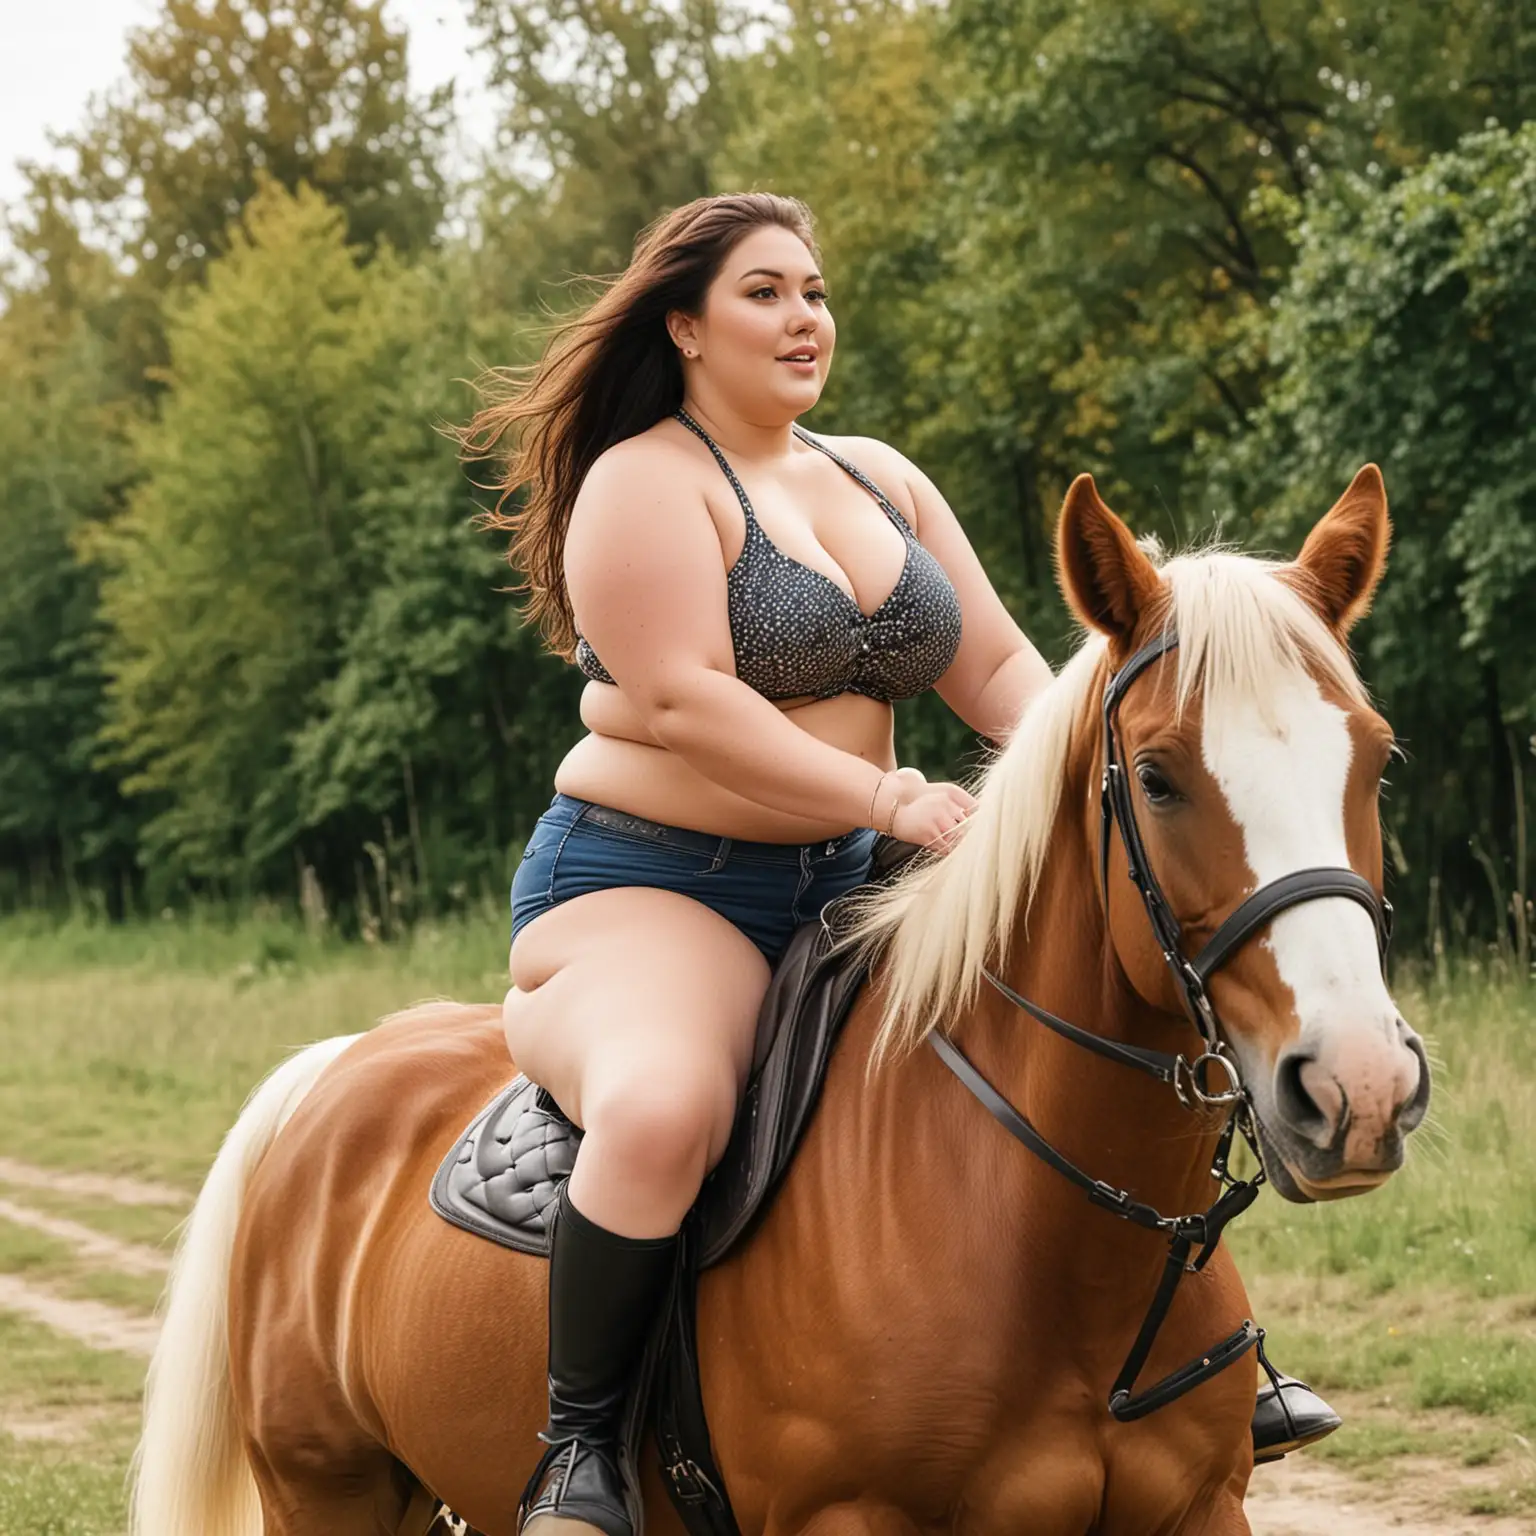 Curvy Woman Enjoying Horseback Riding Adventure